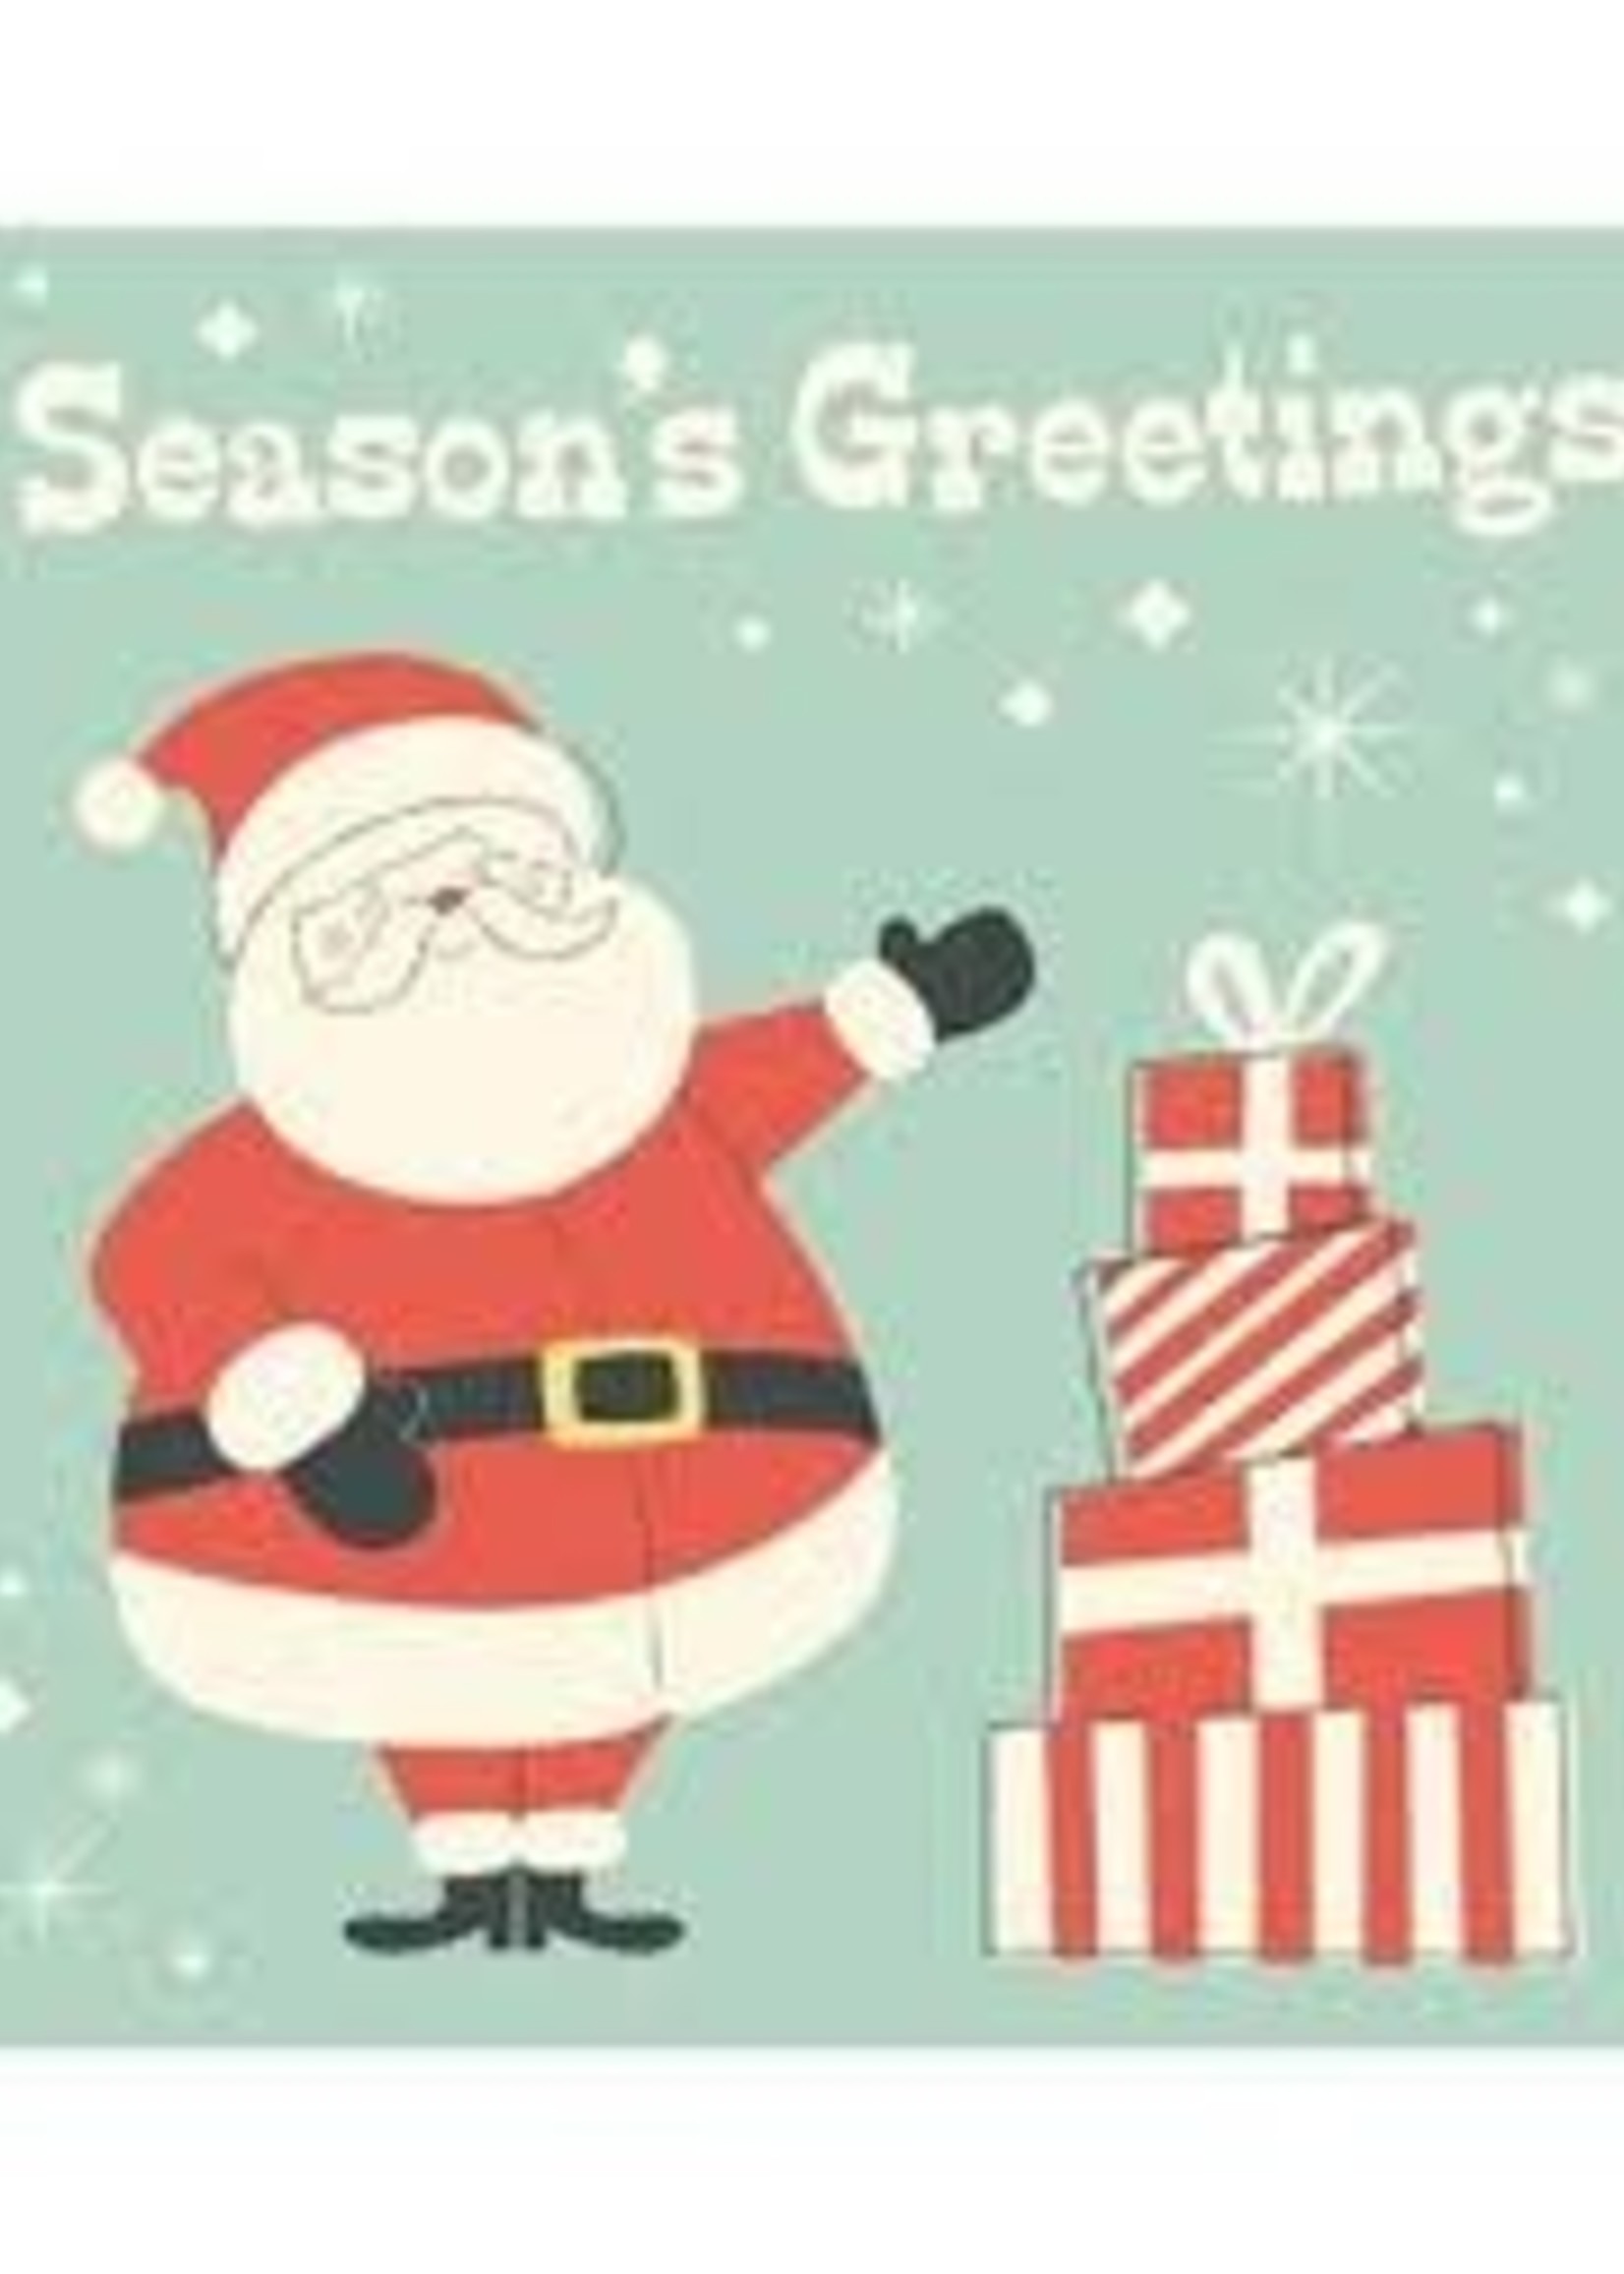 Rex Season's greetings santa card